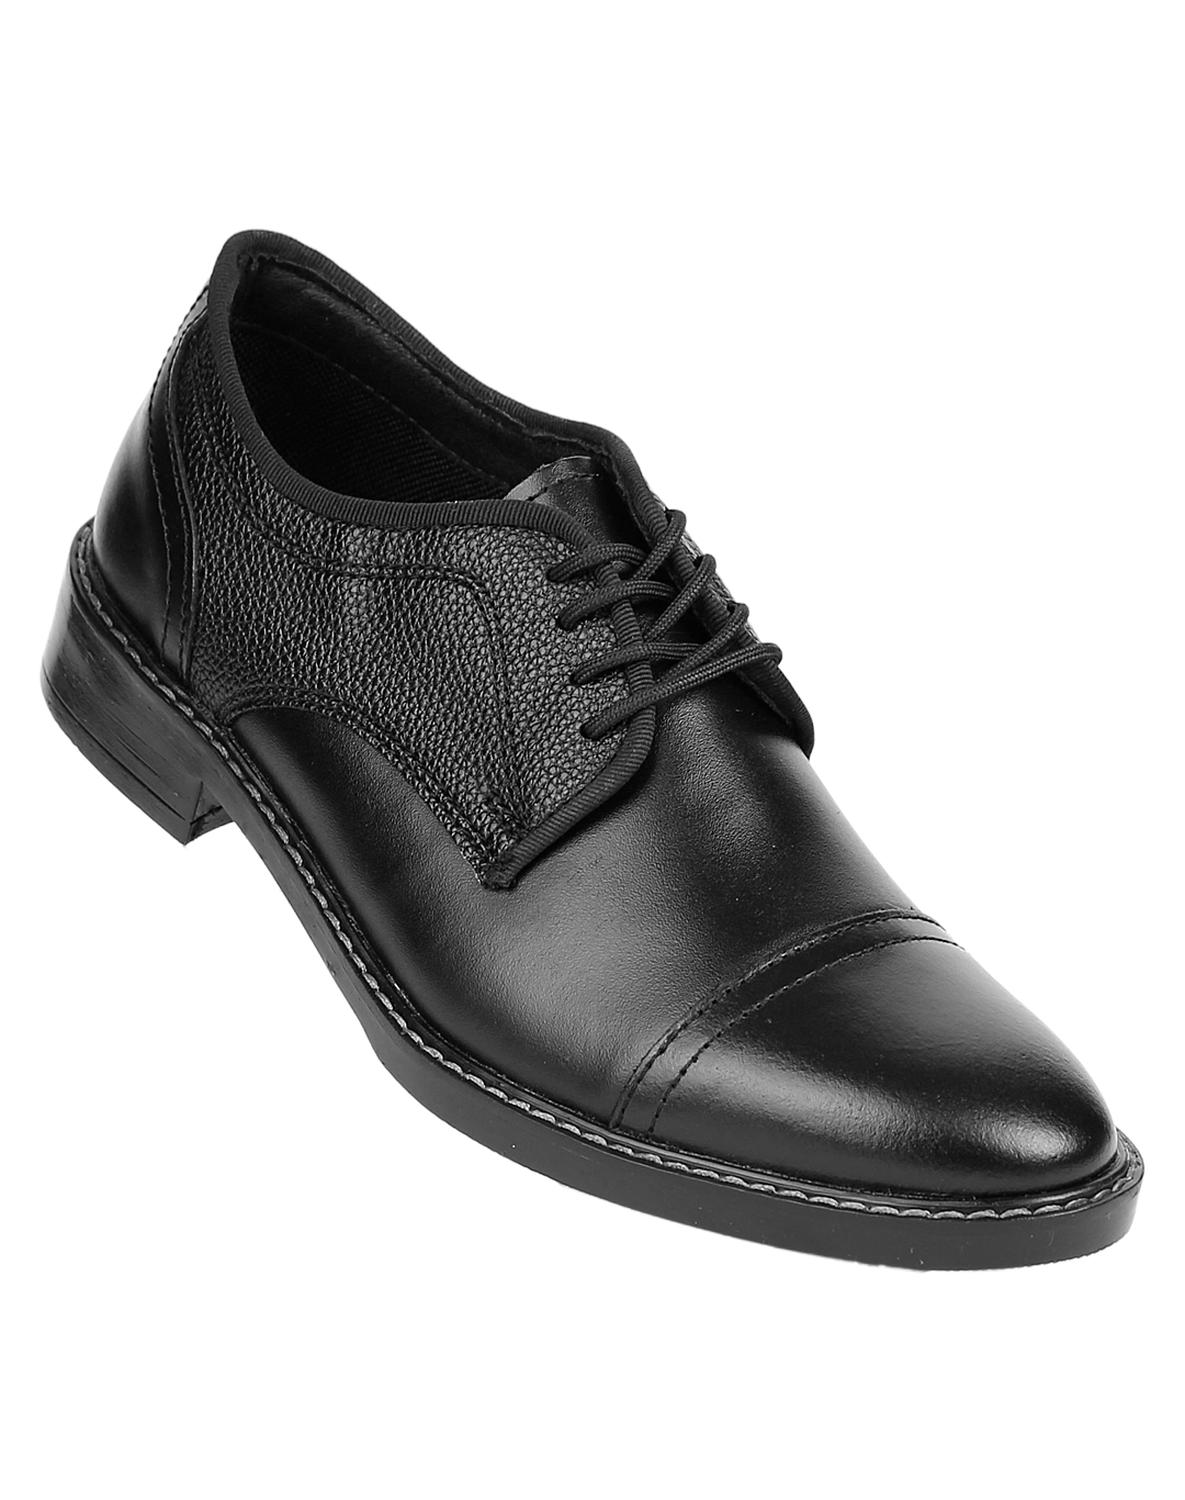 Tenis Zapatos Niño Calzado Infantil Oxford Casual Negro